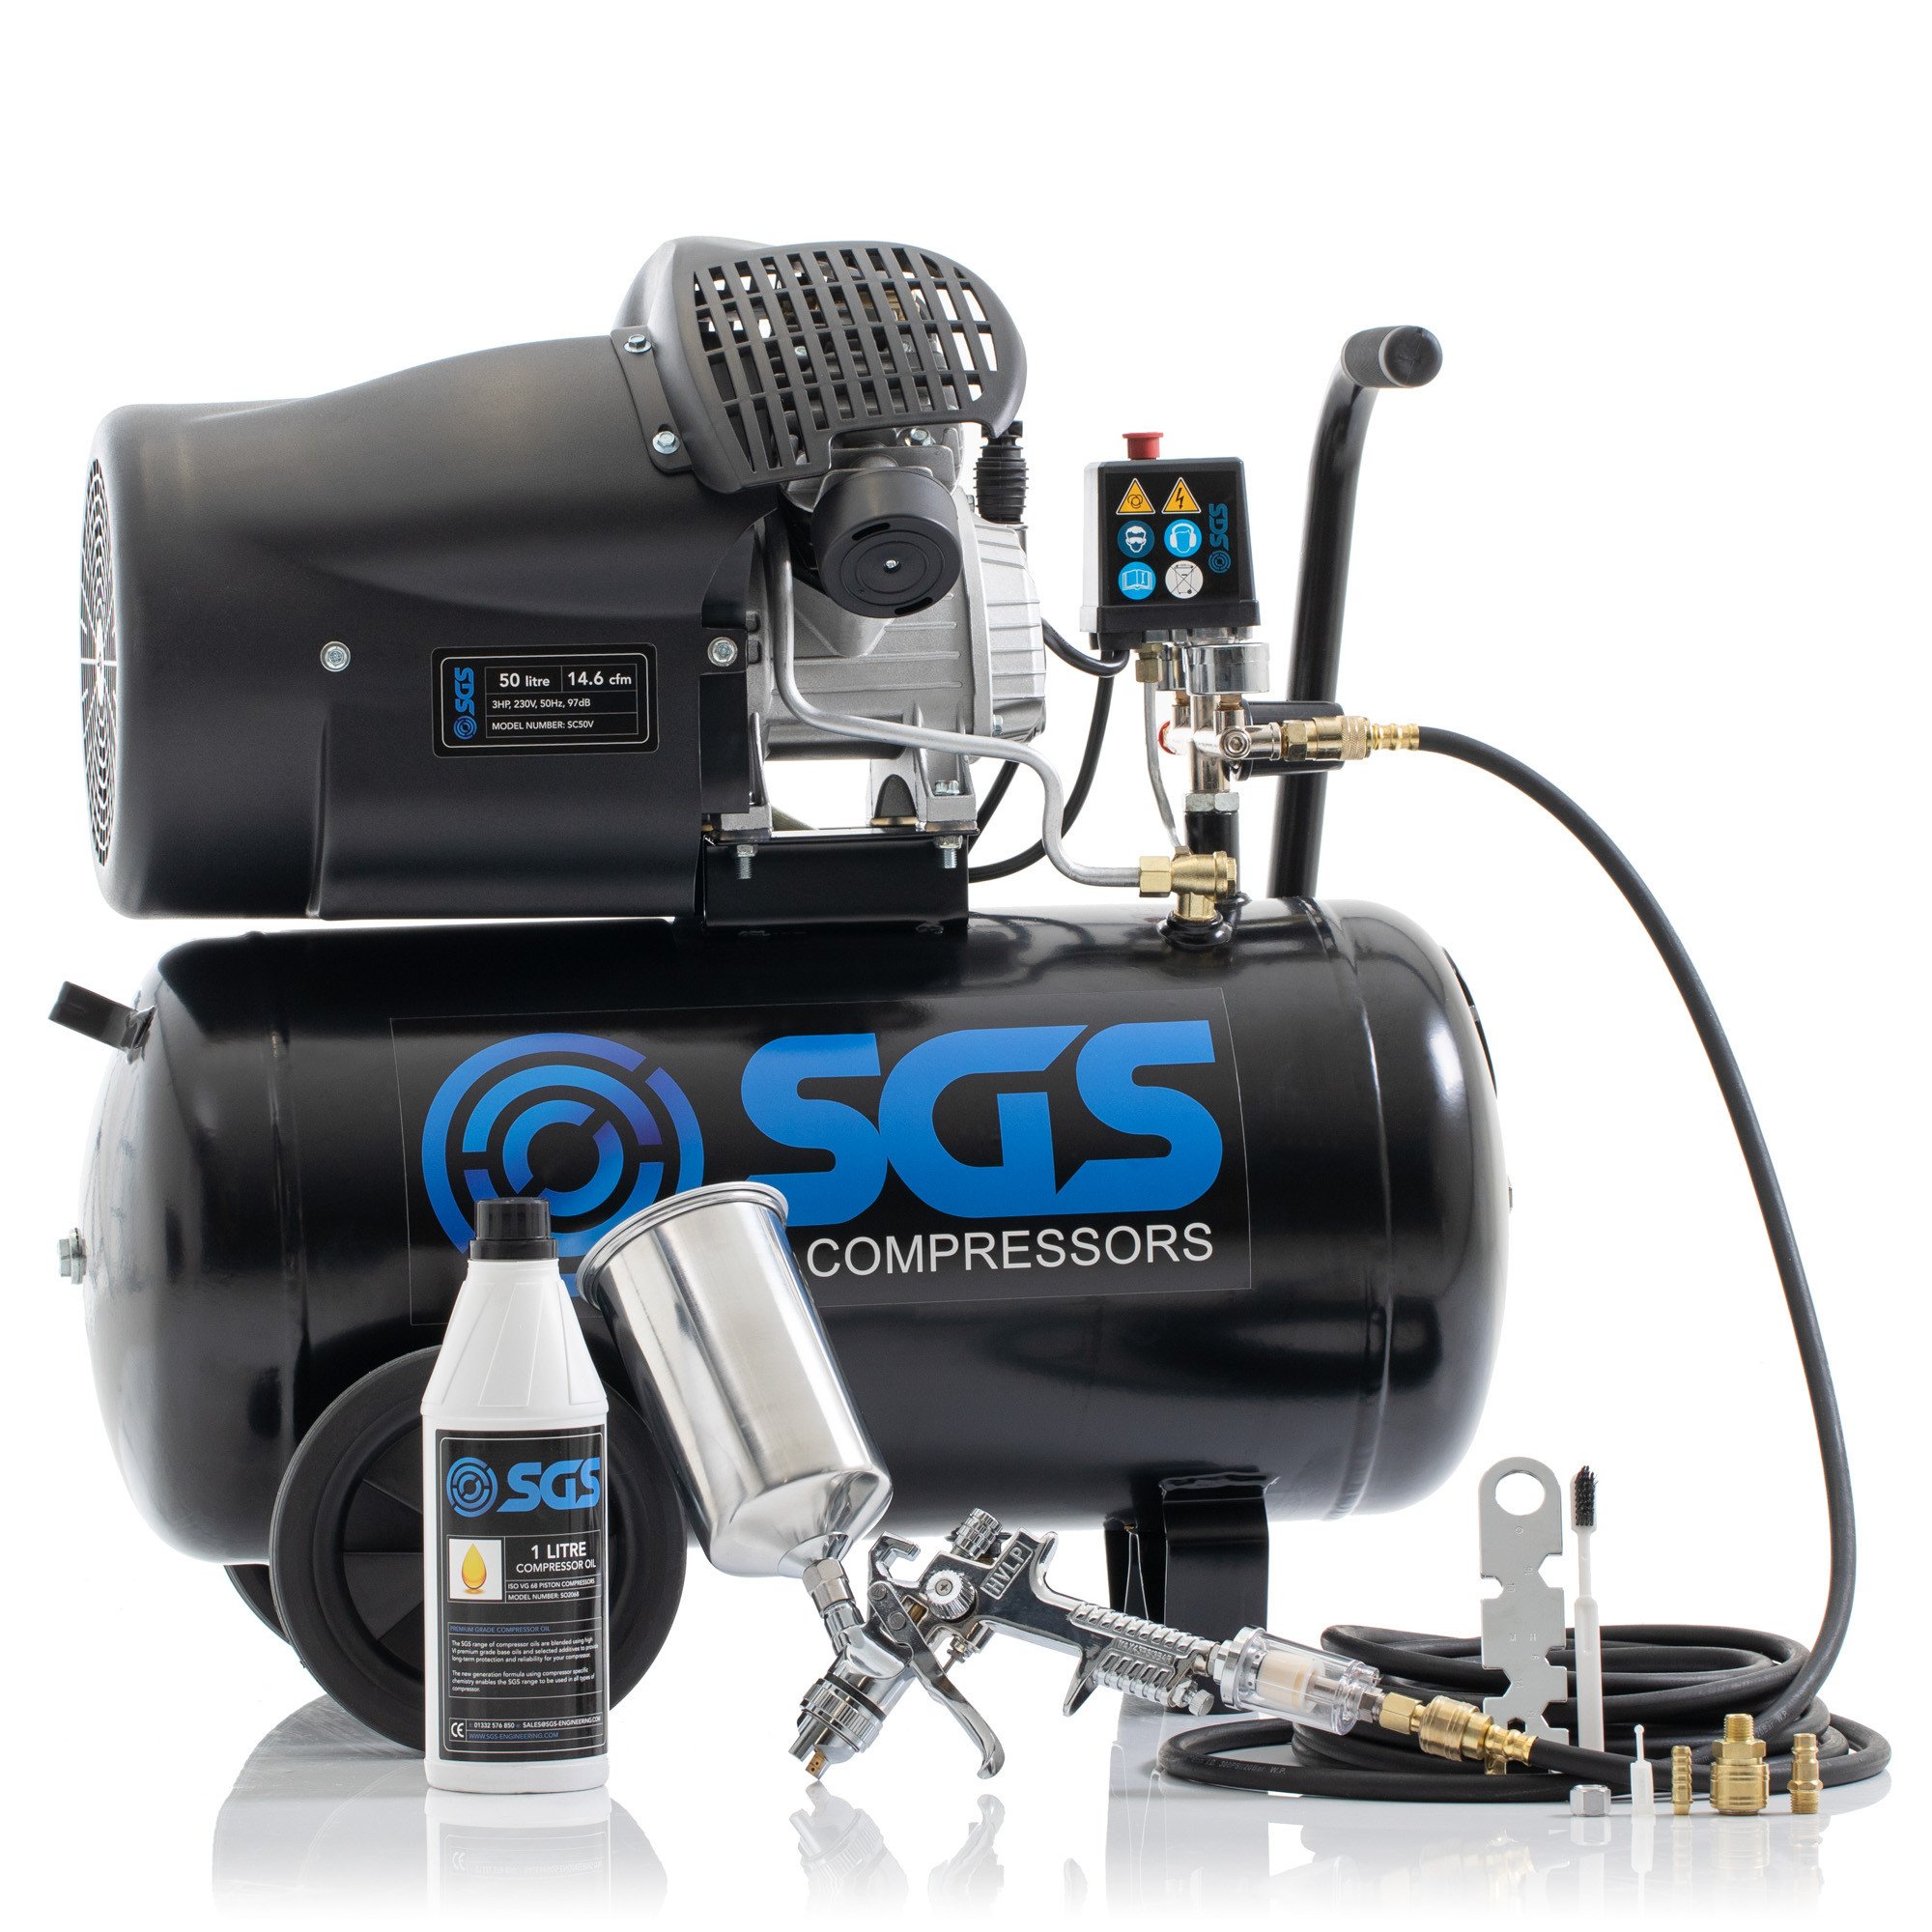 SGS 50升直接驱动空气压缩机带喷枪套件-14.6CFM 3.0HP 50L